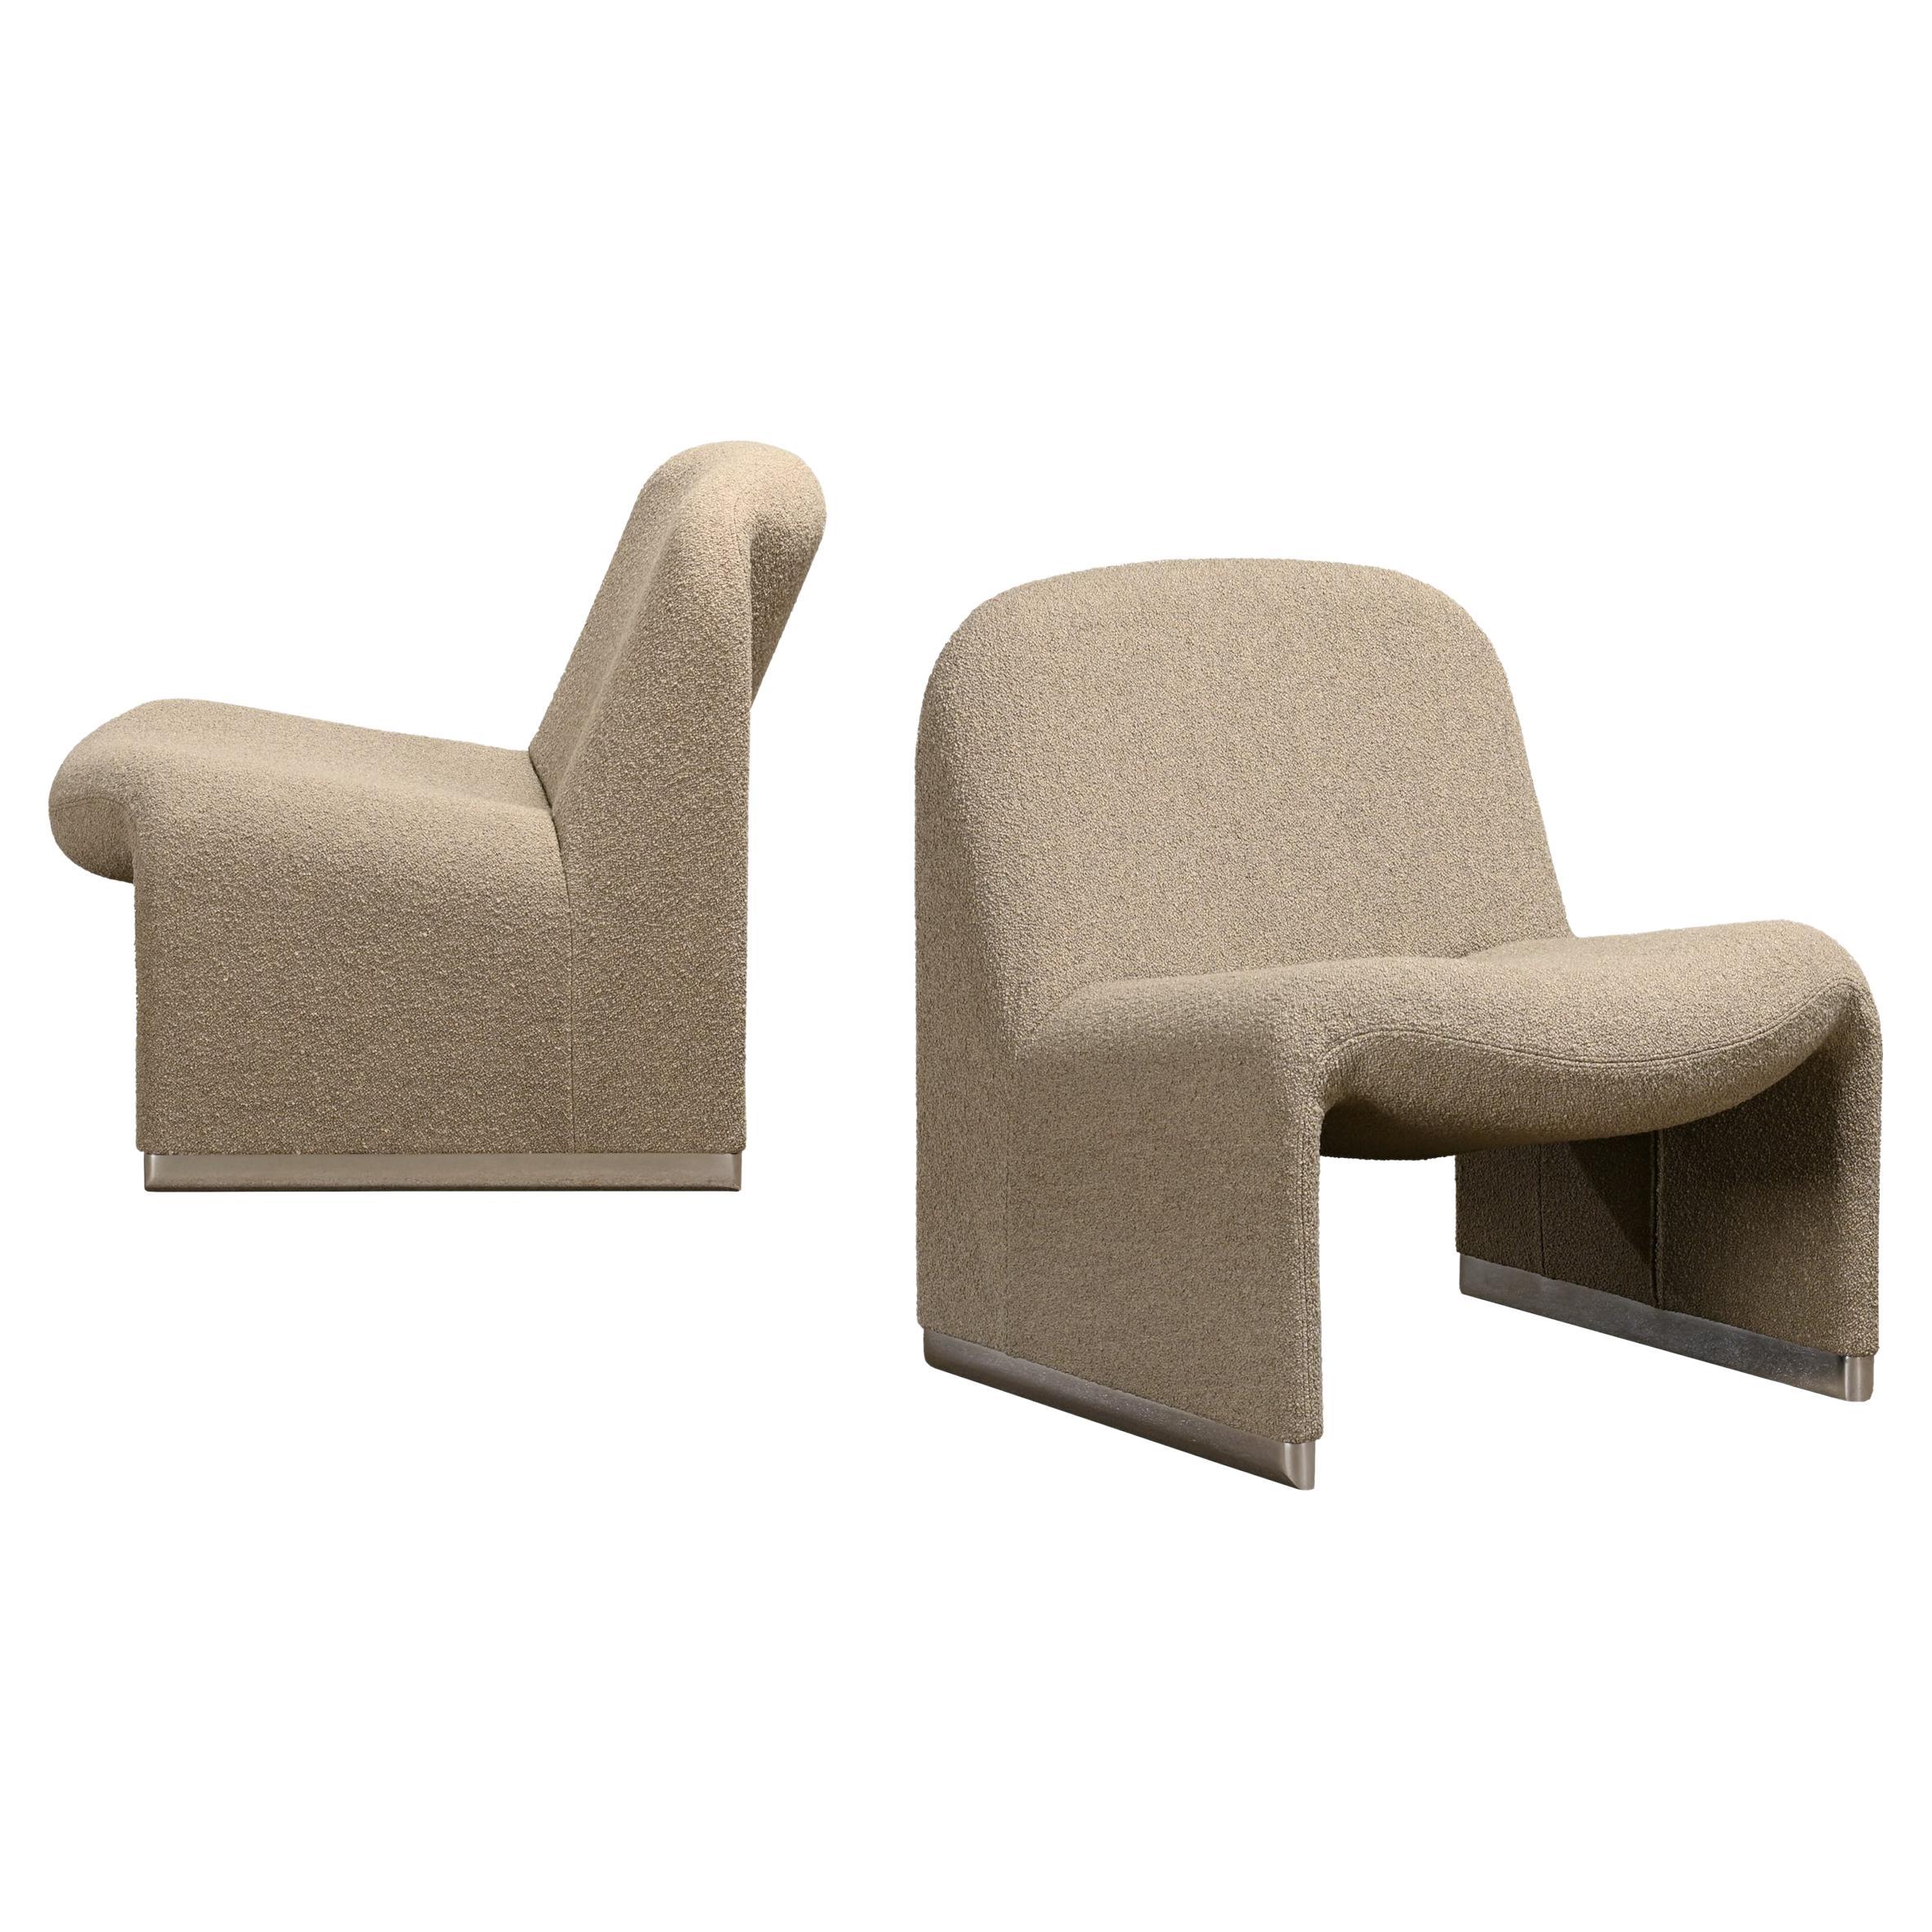 Giancarlo Piretti Alky Lounge Chair in Stone Grey Bouclé Wool, Anonima Castelli For Sale